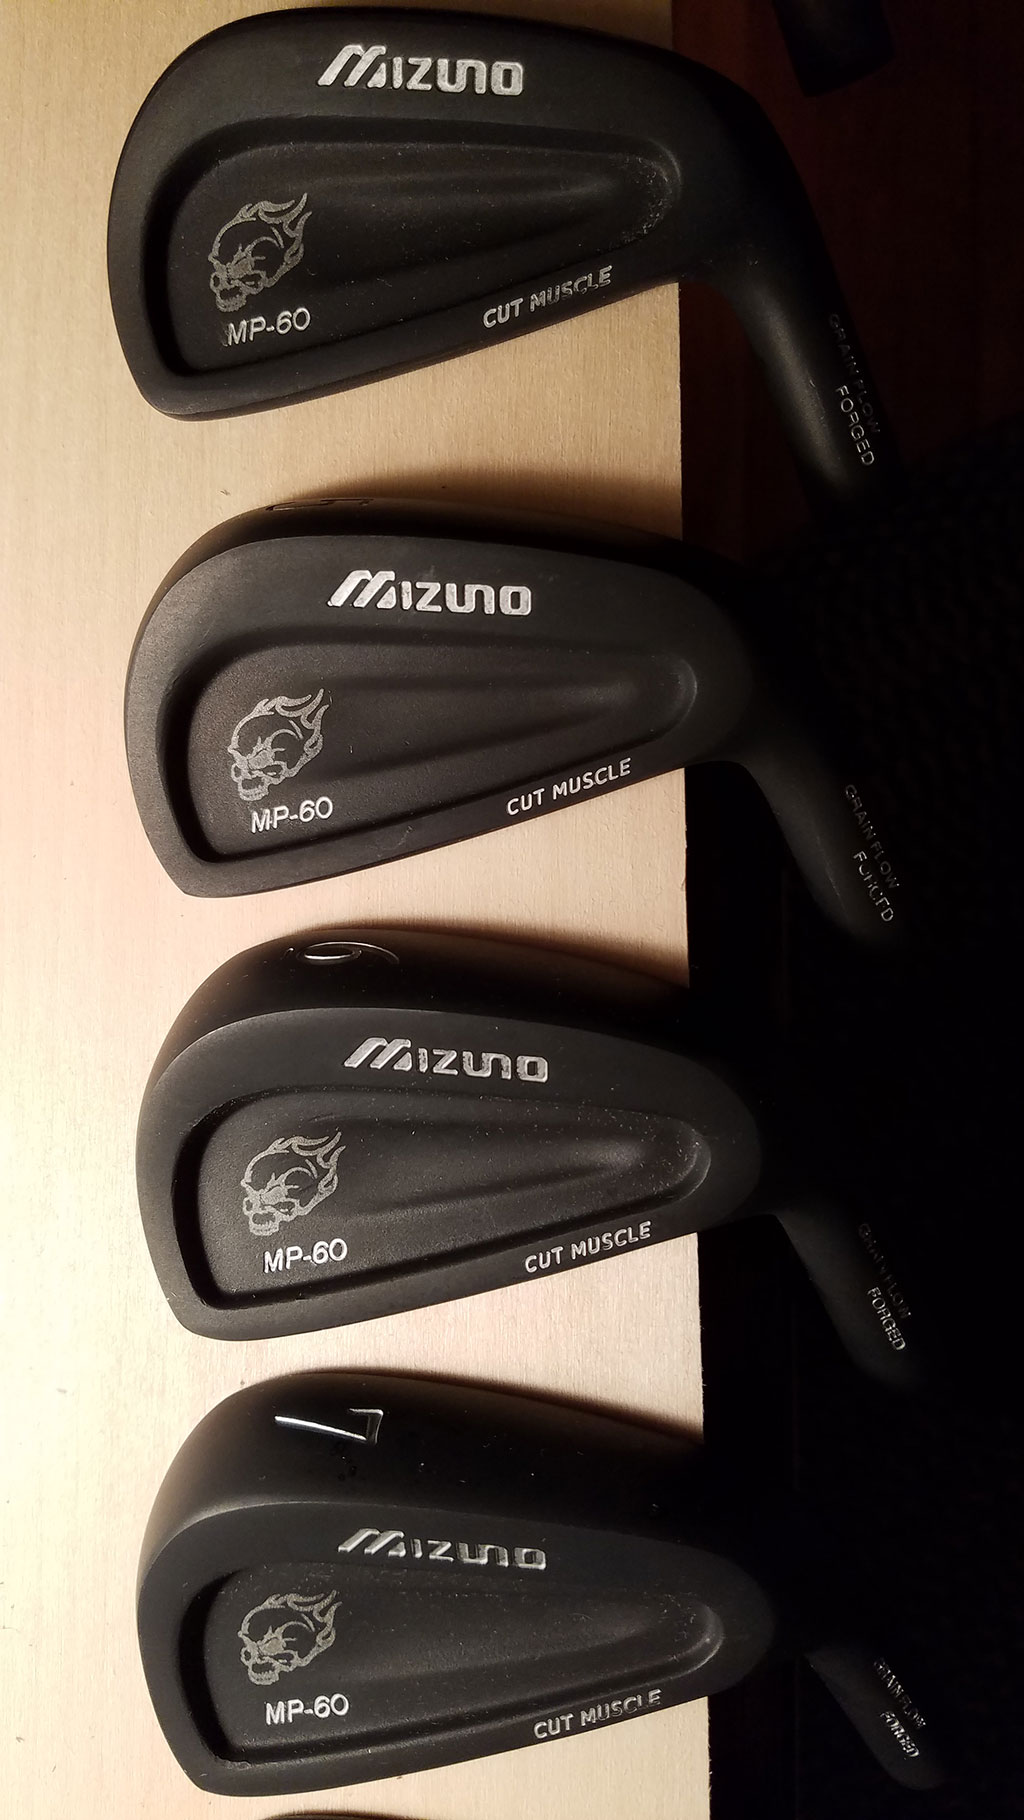 Mizuno Golf Clubs with Laser Engraving